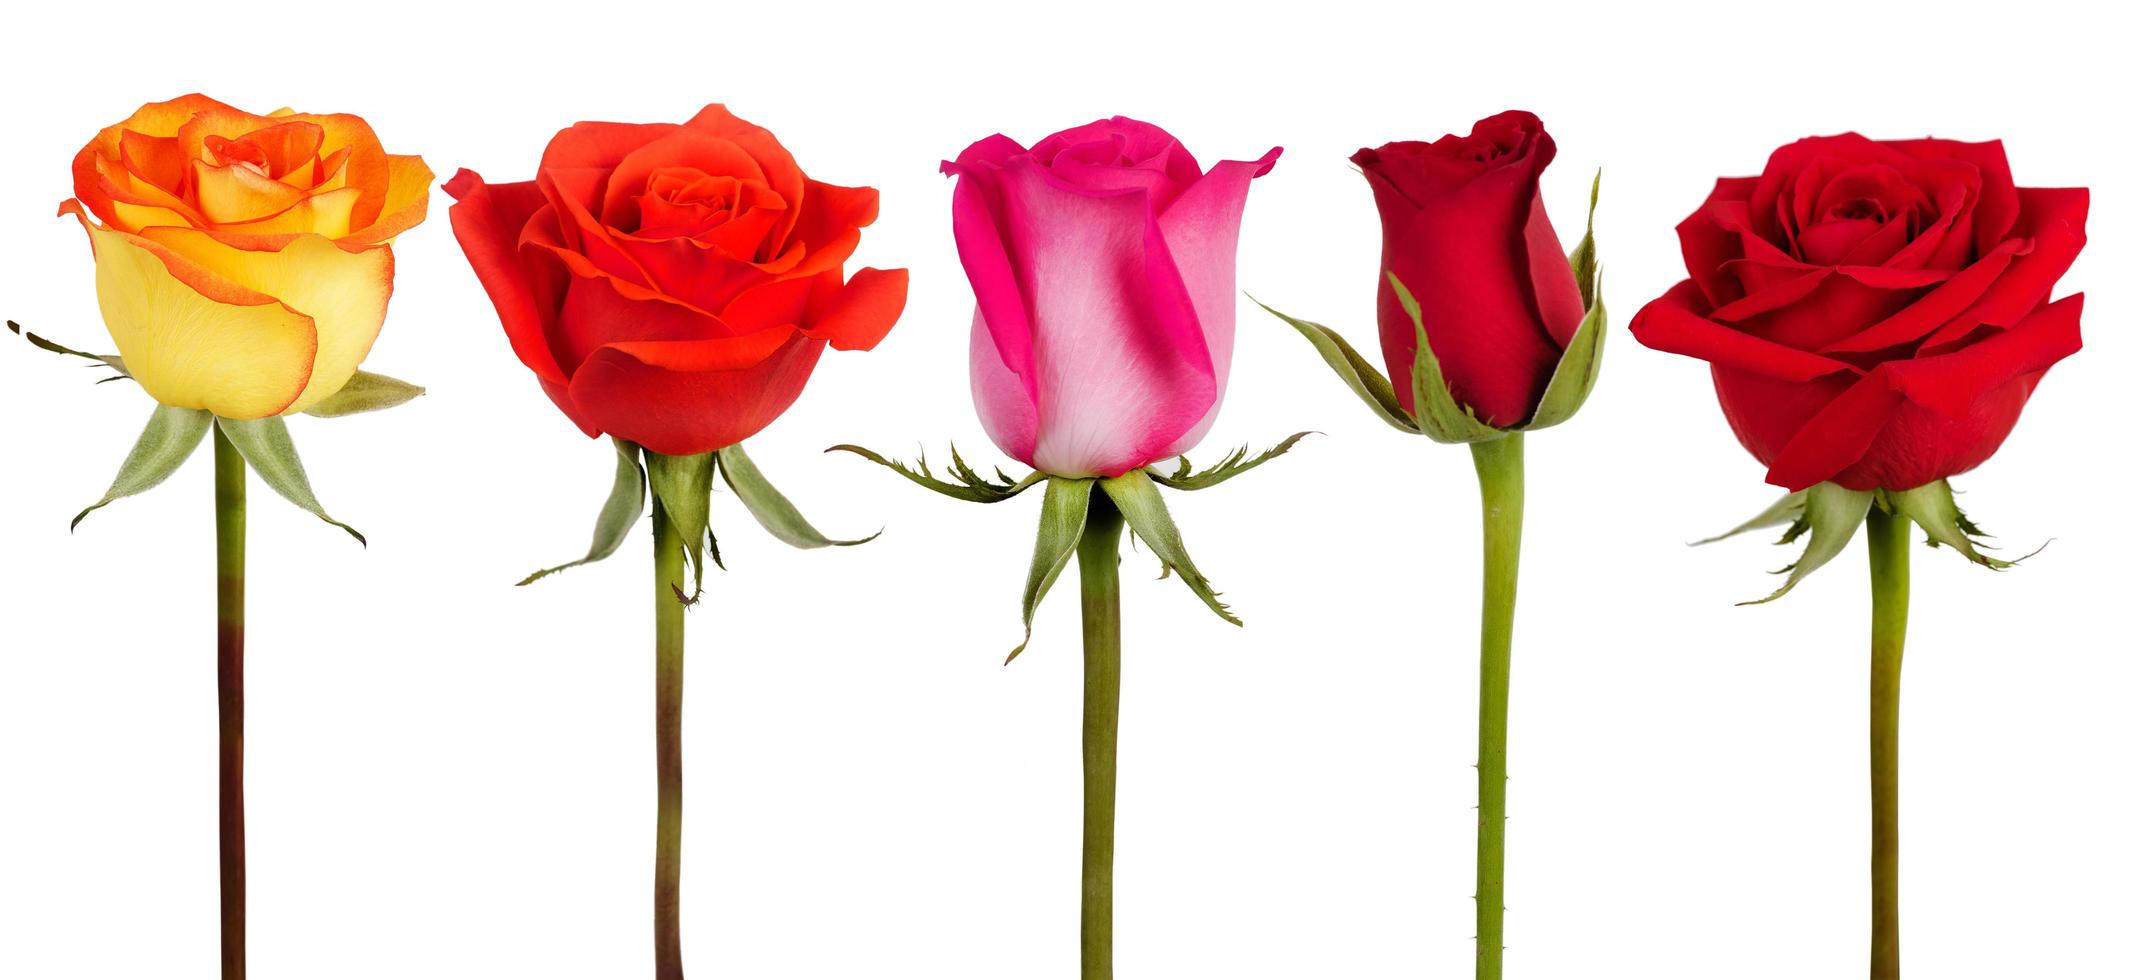 cinque rose di diversi colori foto